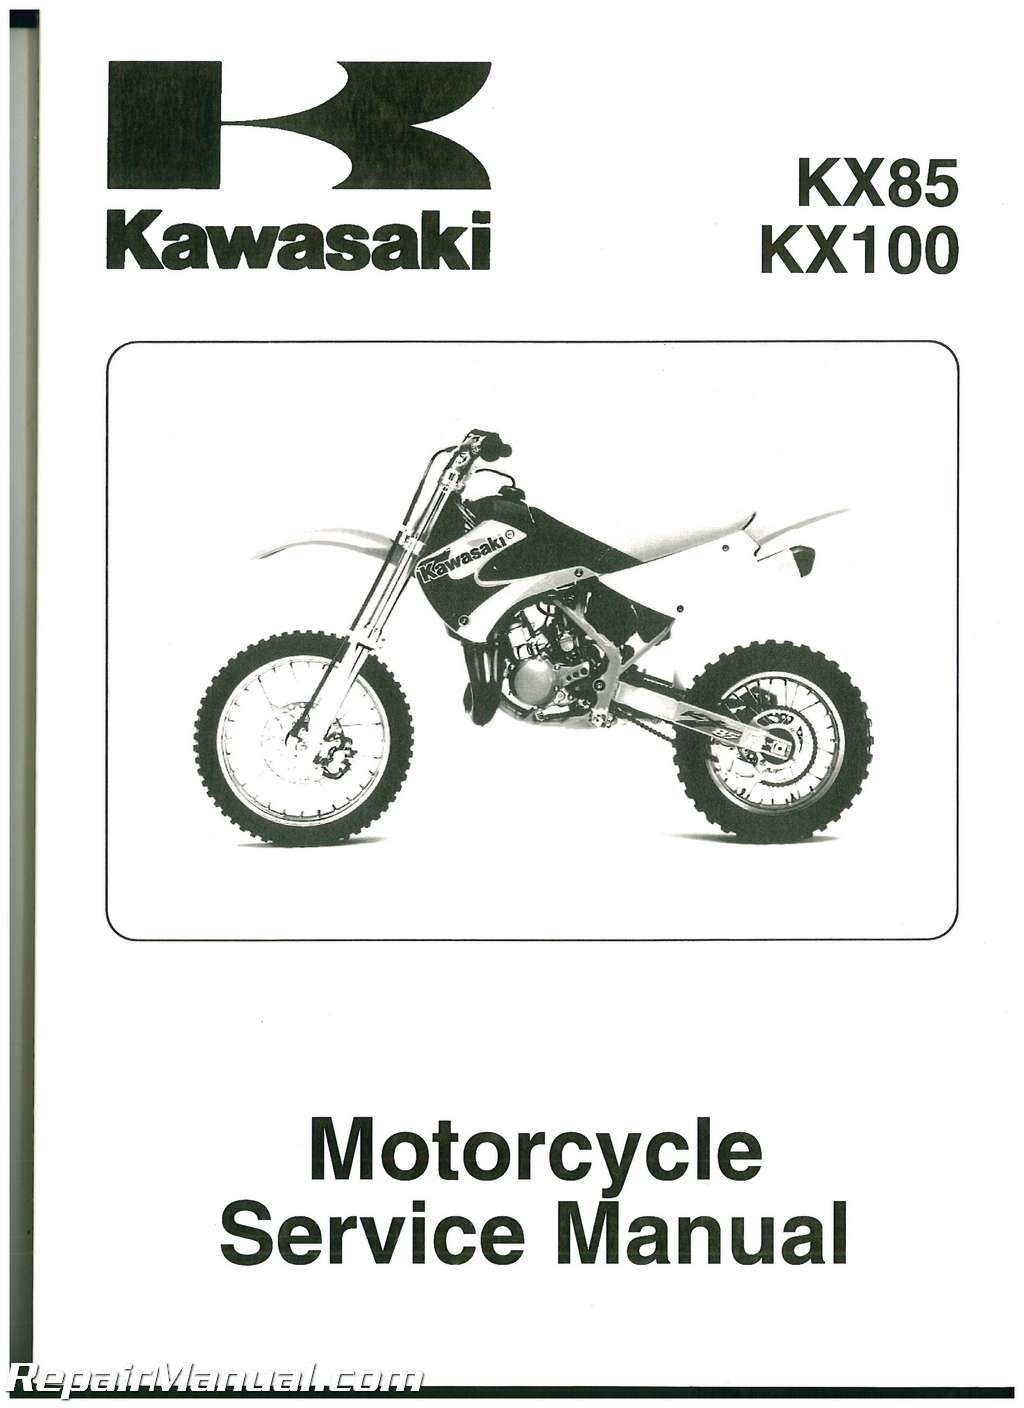 2001-2007 KX85 Service Manual